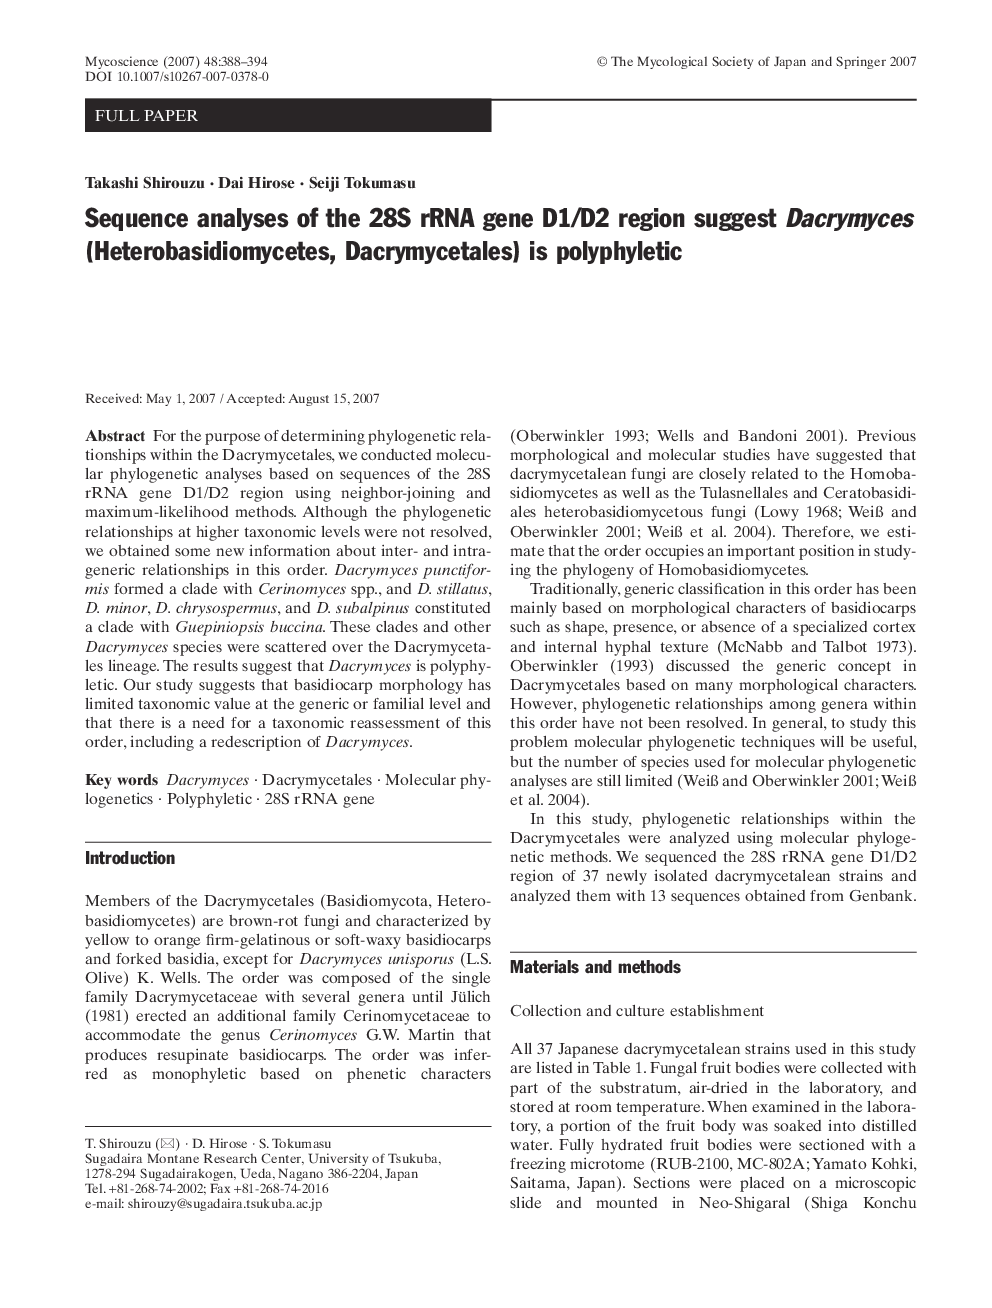 Sequence analyses of the 28S rRNA gene D1/D2 region suggest Dacrymyces (Heterobasidiomycetes, Dacrymycetales) is polyphyletic